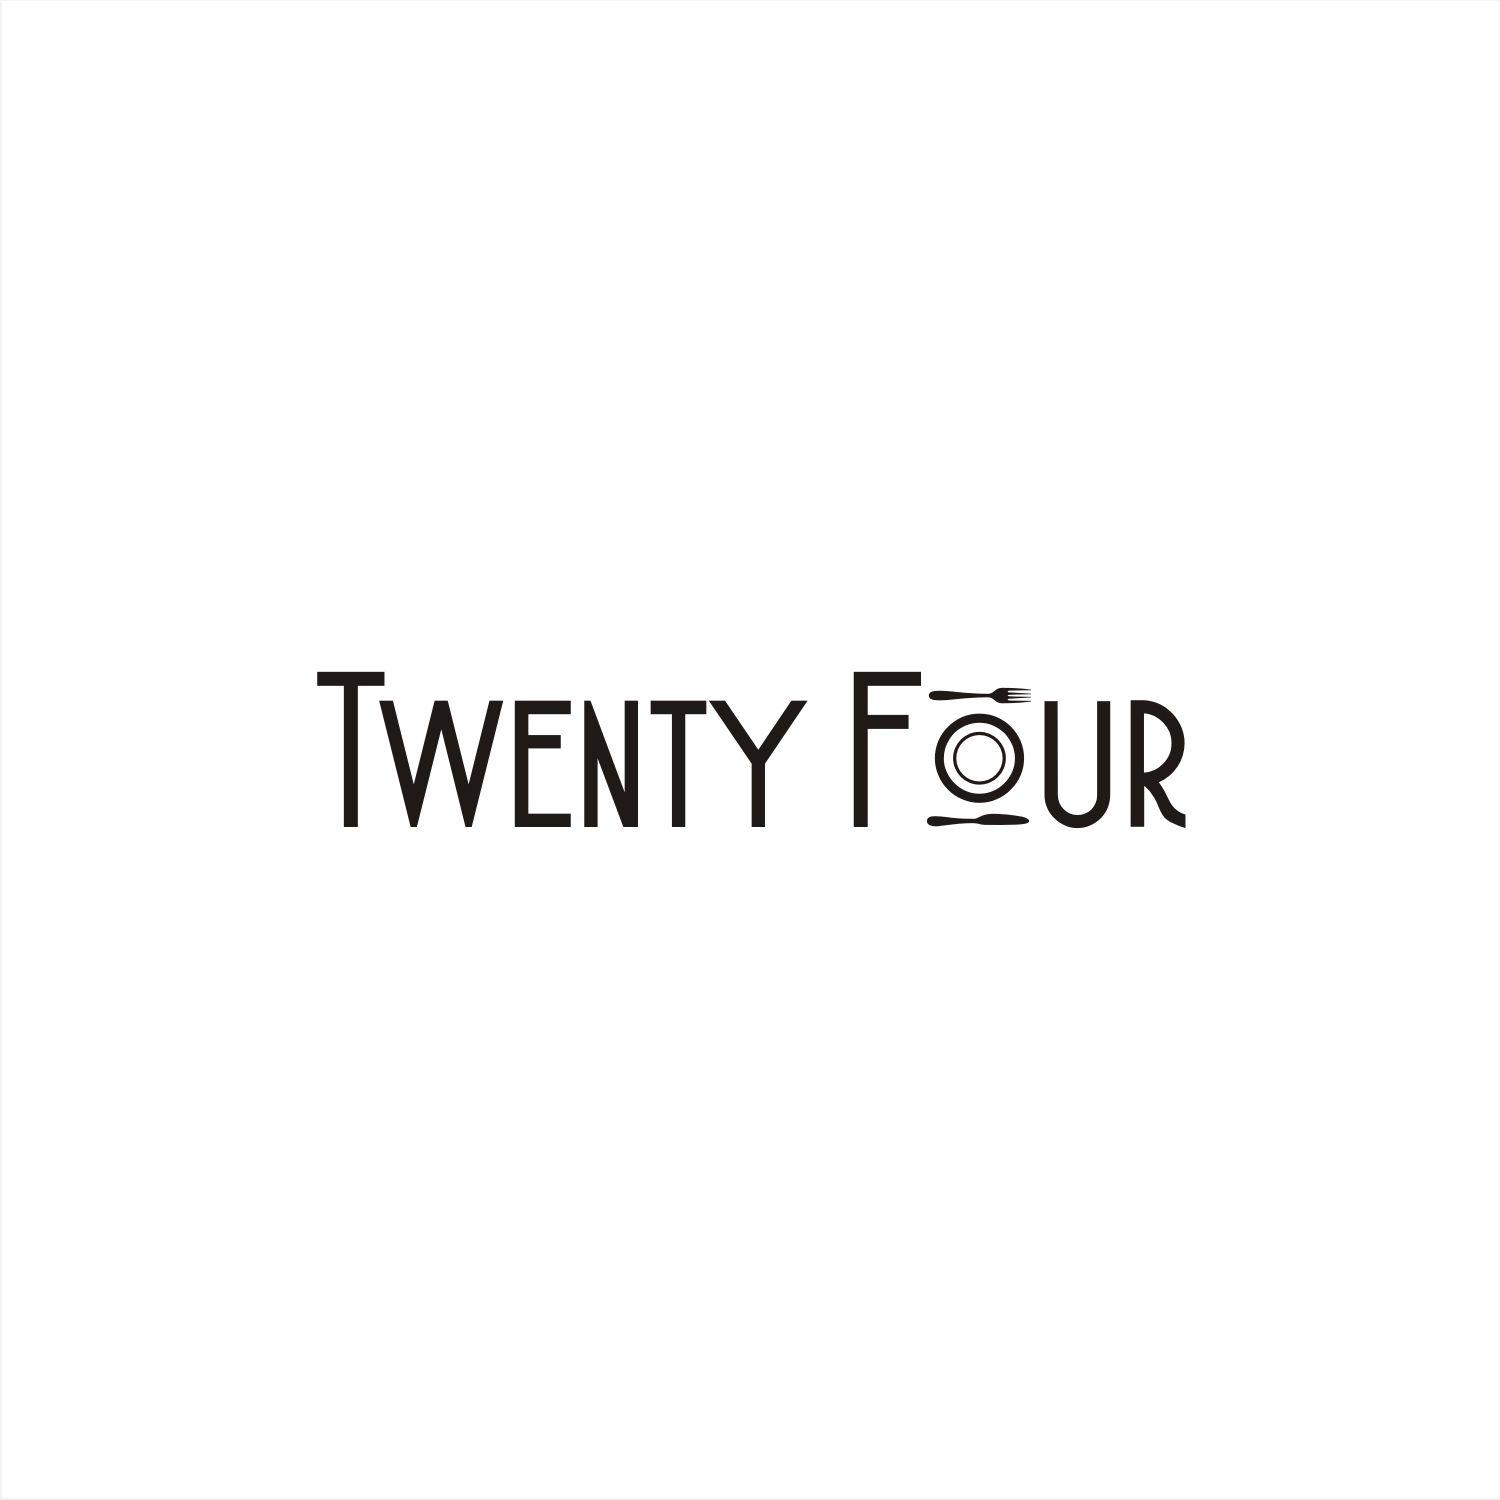 Twenty-Four Logo - Restaurant Logo Design for Twenty Four by yulioantoni's | Design ...